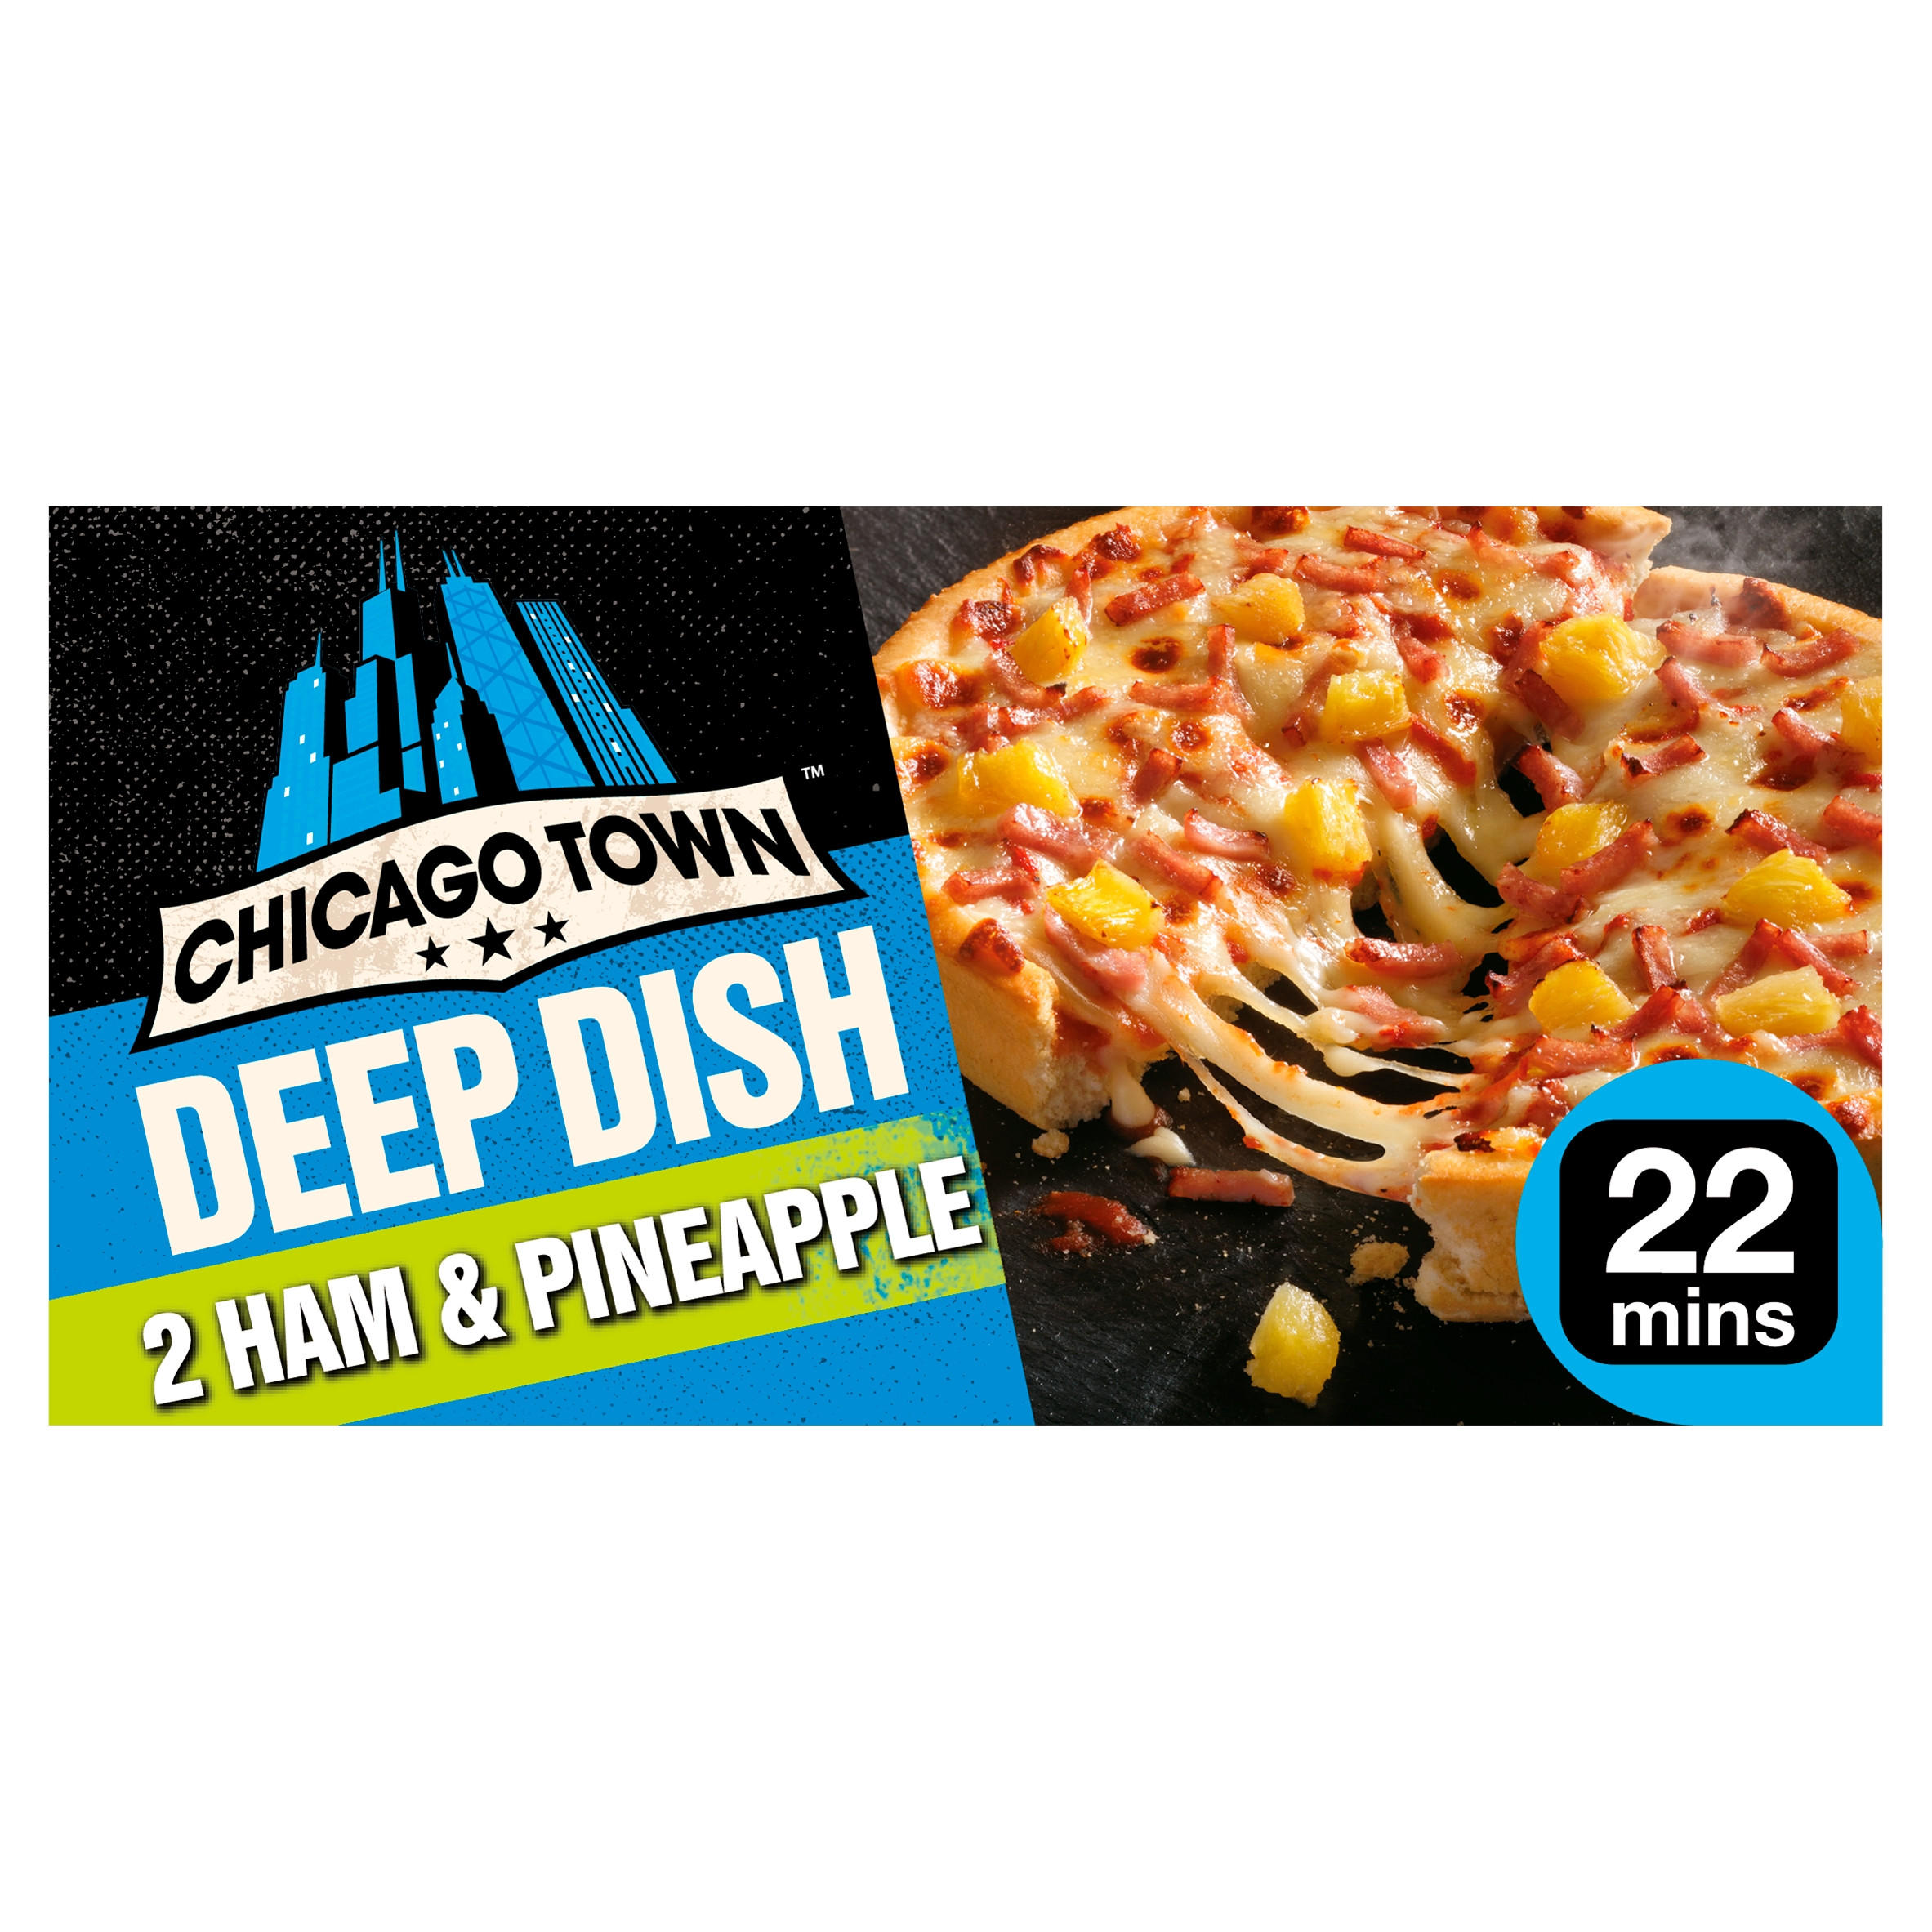 Chicago Town 2 Deep Dish Ham & Pineapple Pizzas 330g